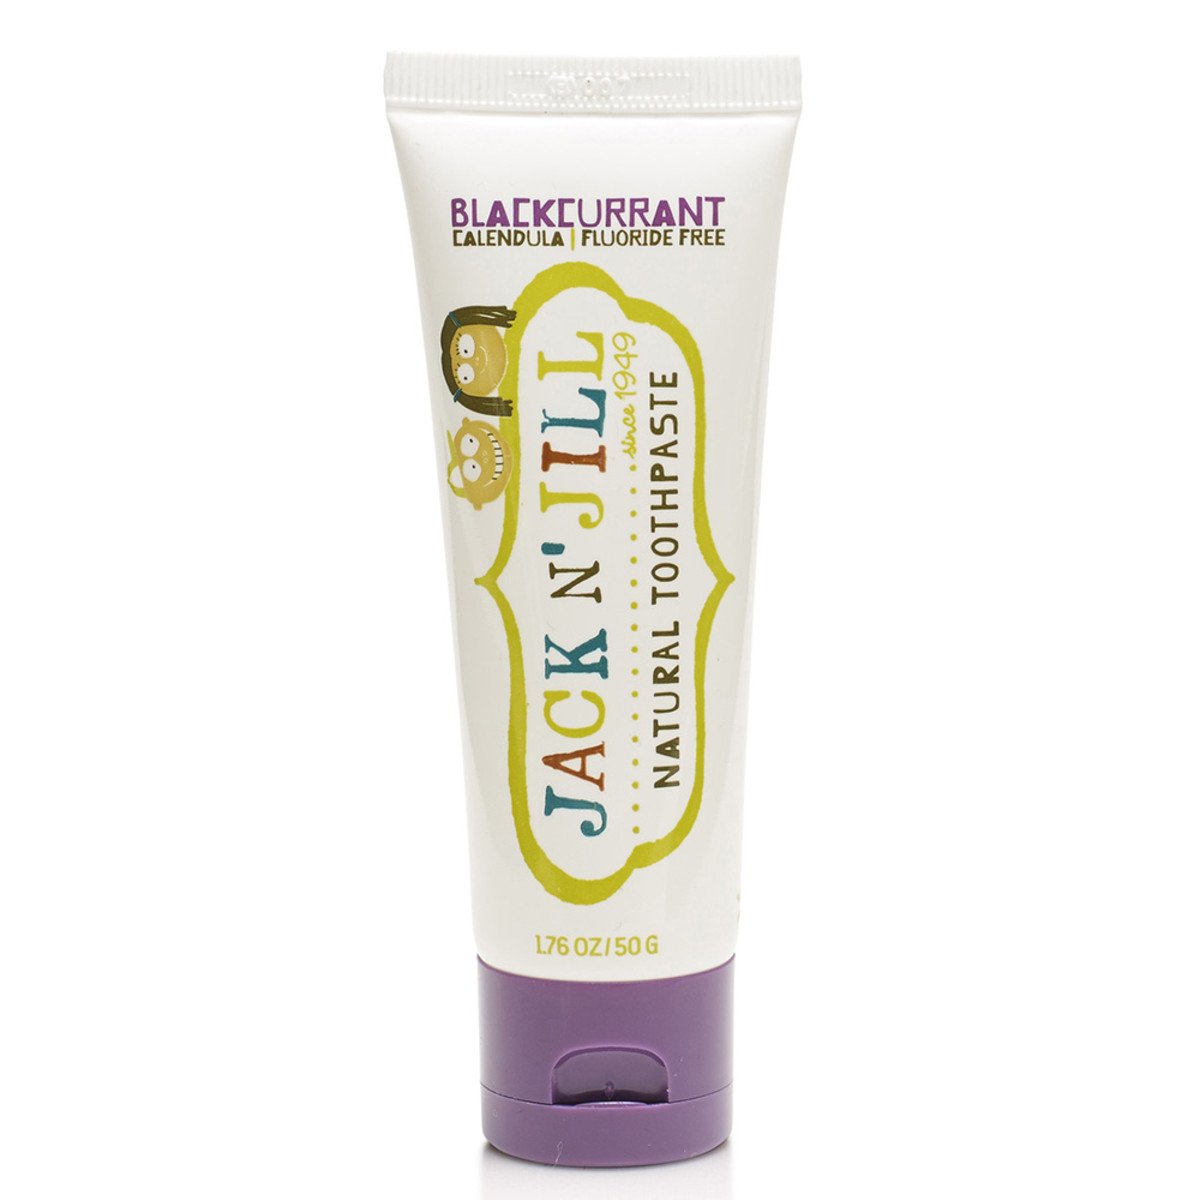 Jack N Jill Natural Calendula Toothpaste Blackcurrant 50g - The Nappy Shop